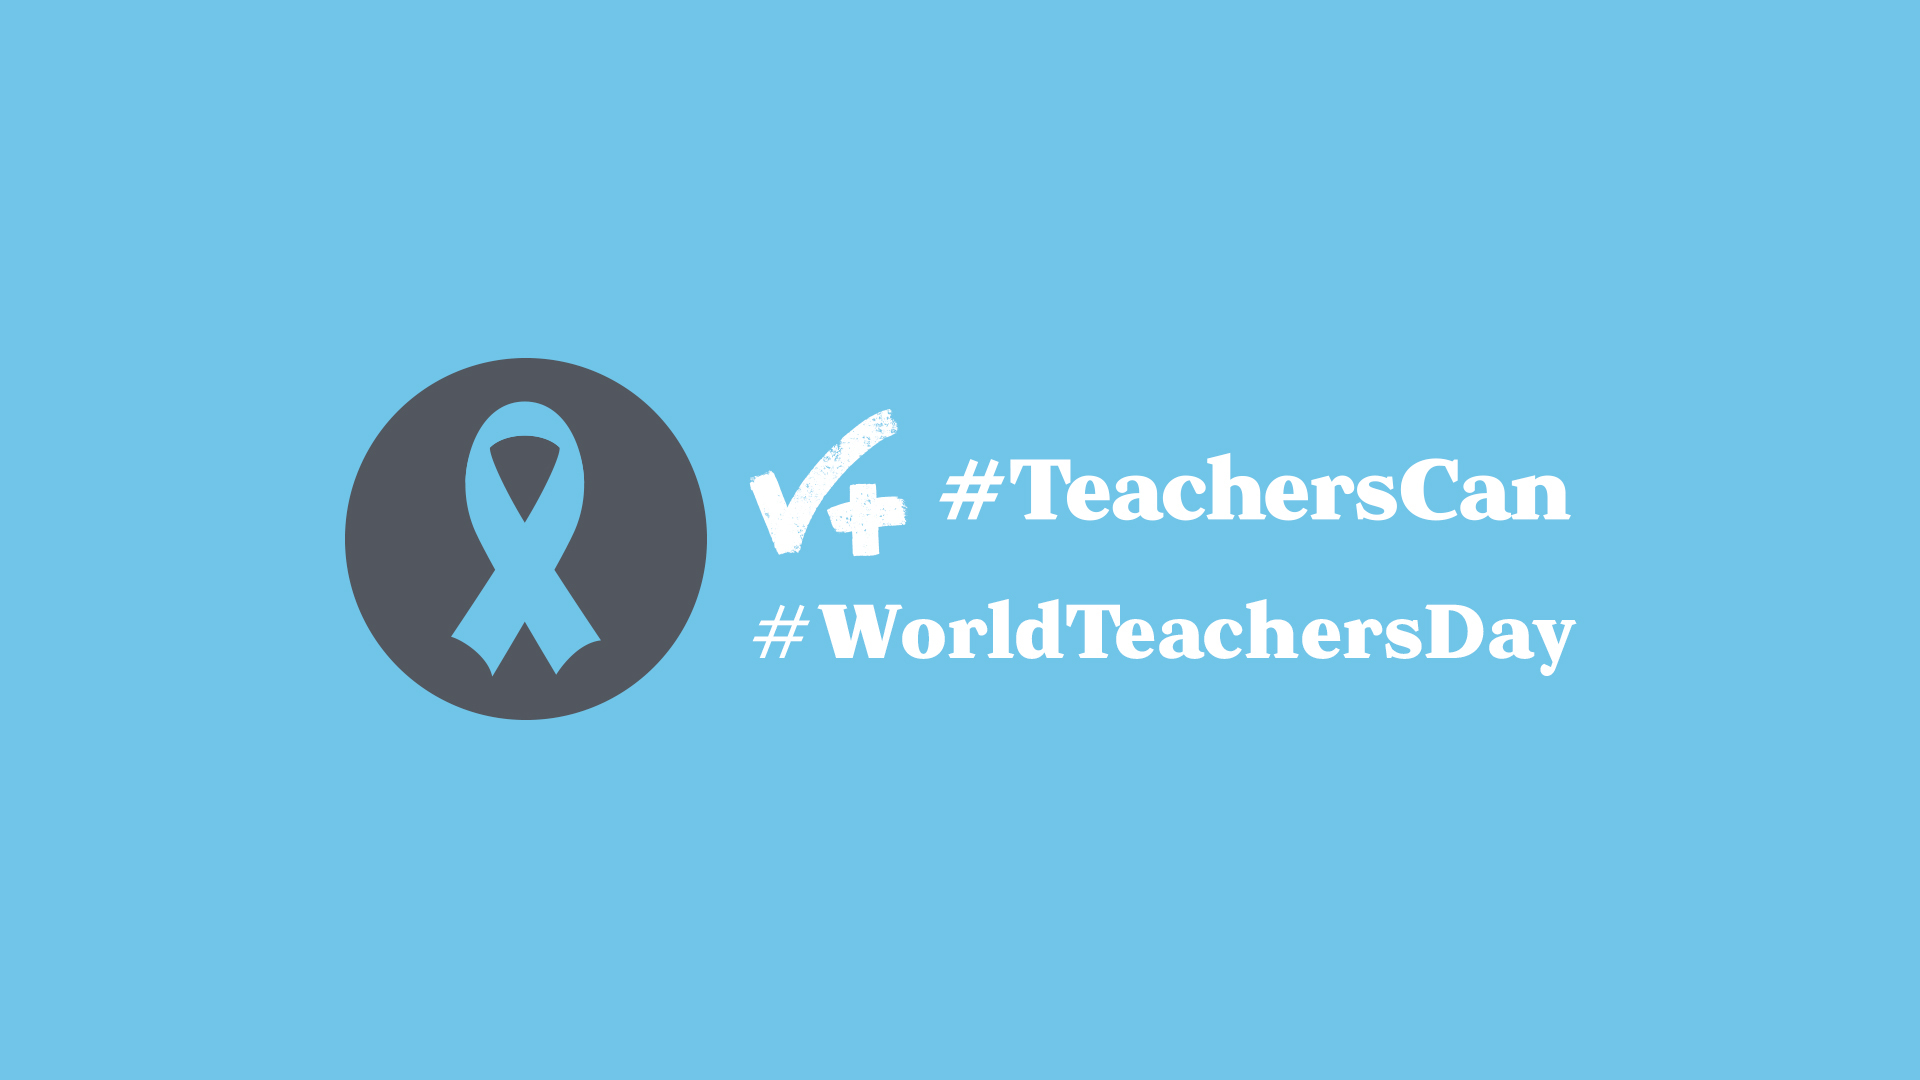 Teachers Can World Teacher's Day - show support banner image